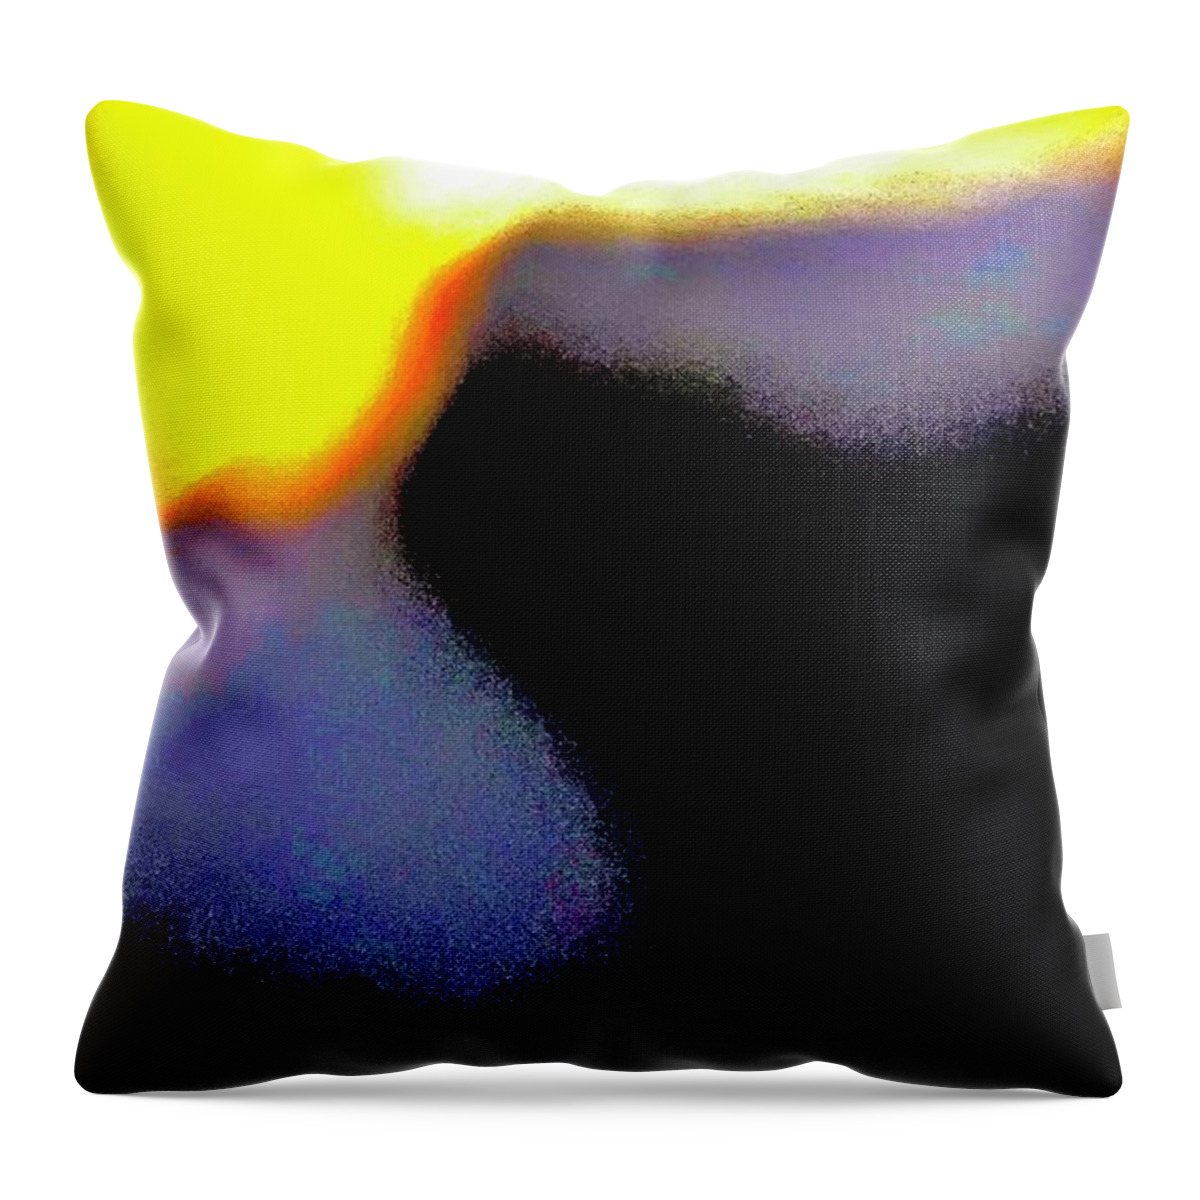  Throw Pillow featuring the digital art Hyped up Deception by Glenn Hernandez